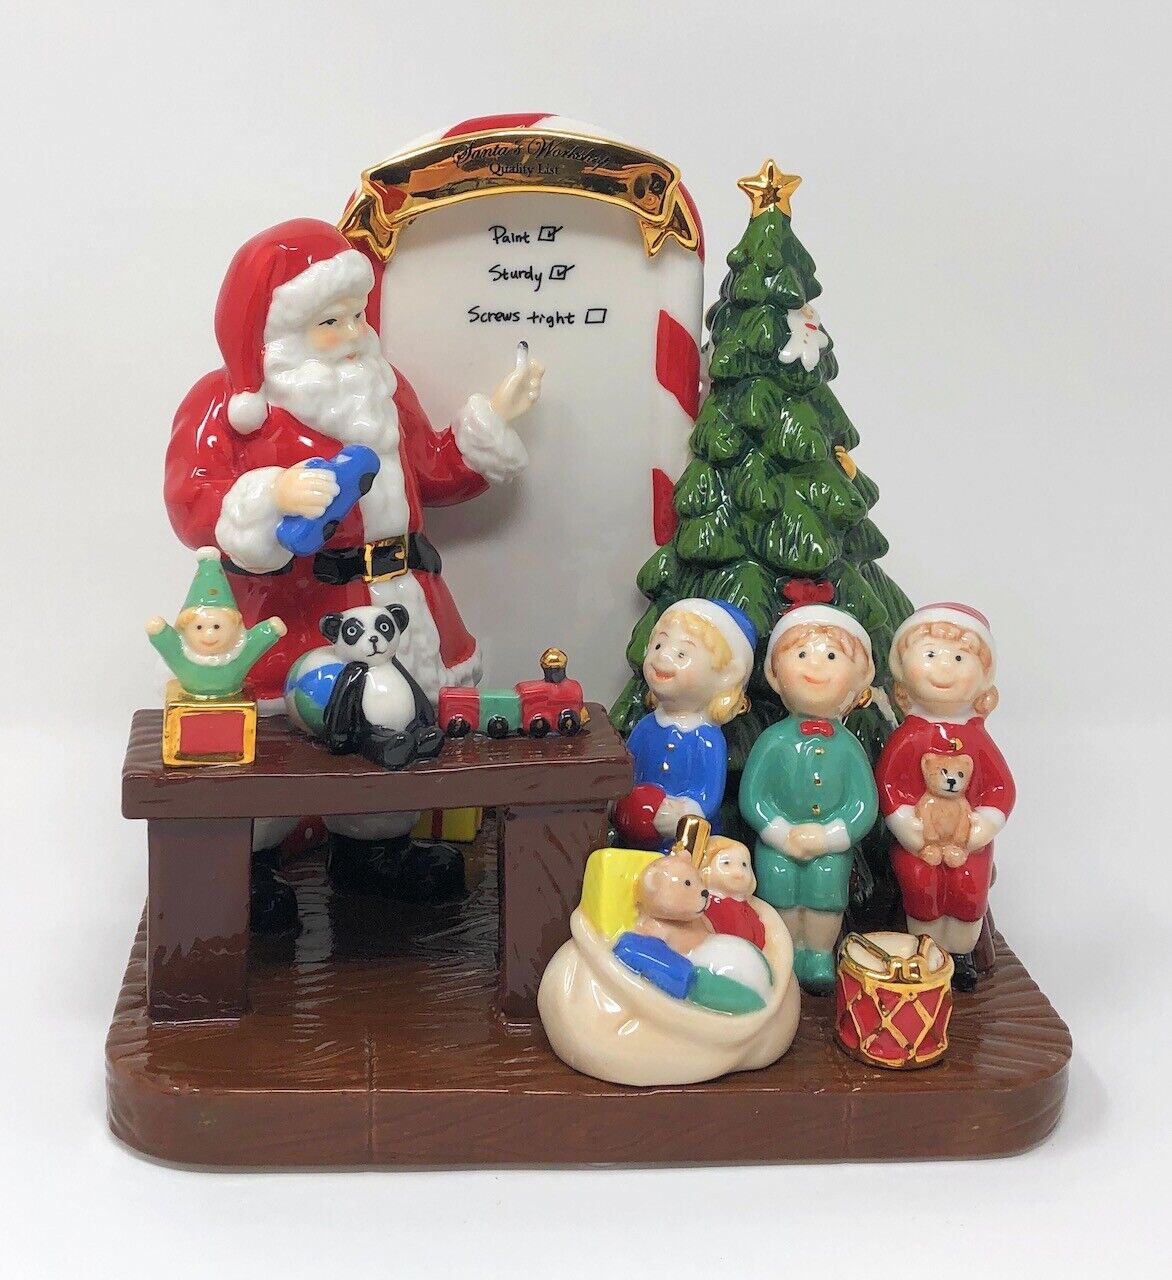 2011 ROYAL DOULTON Santa's Toy Testing Figurine Figure Limited Edition Christmas